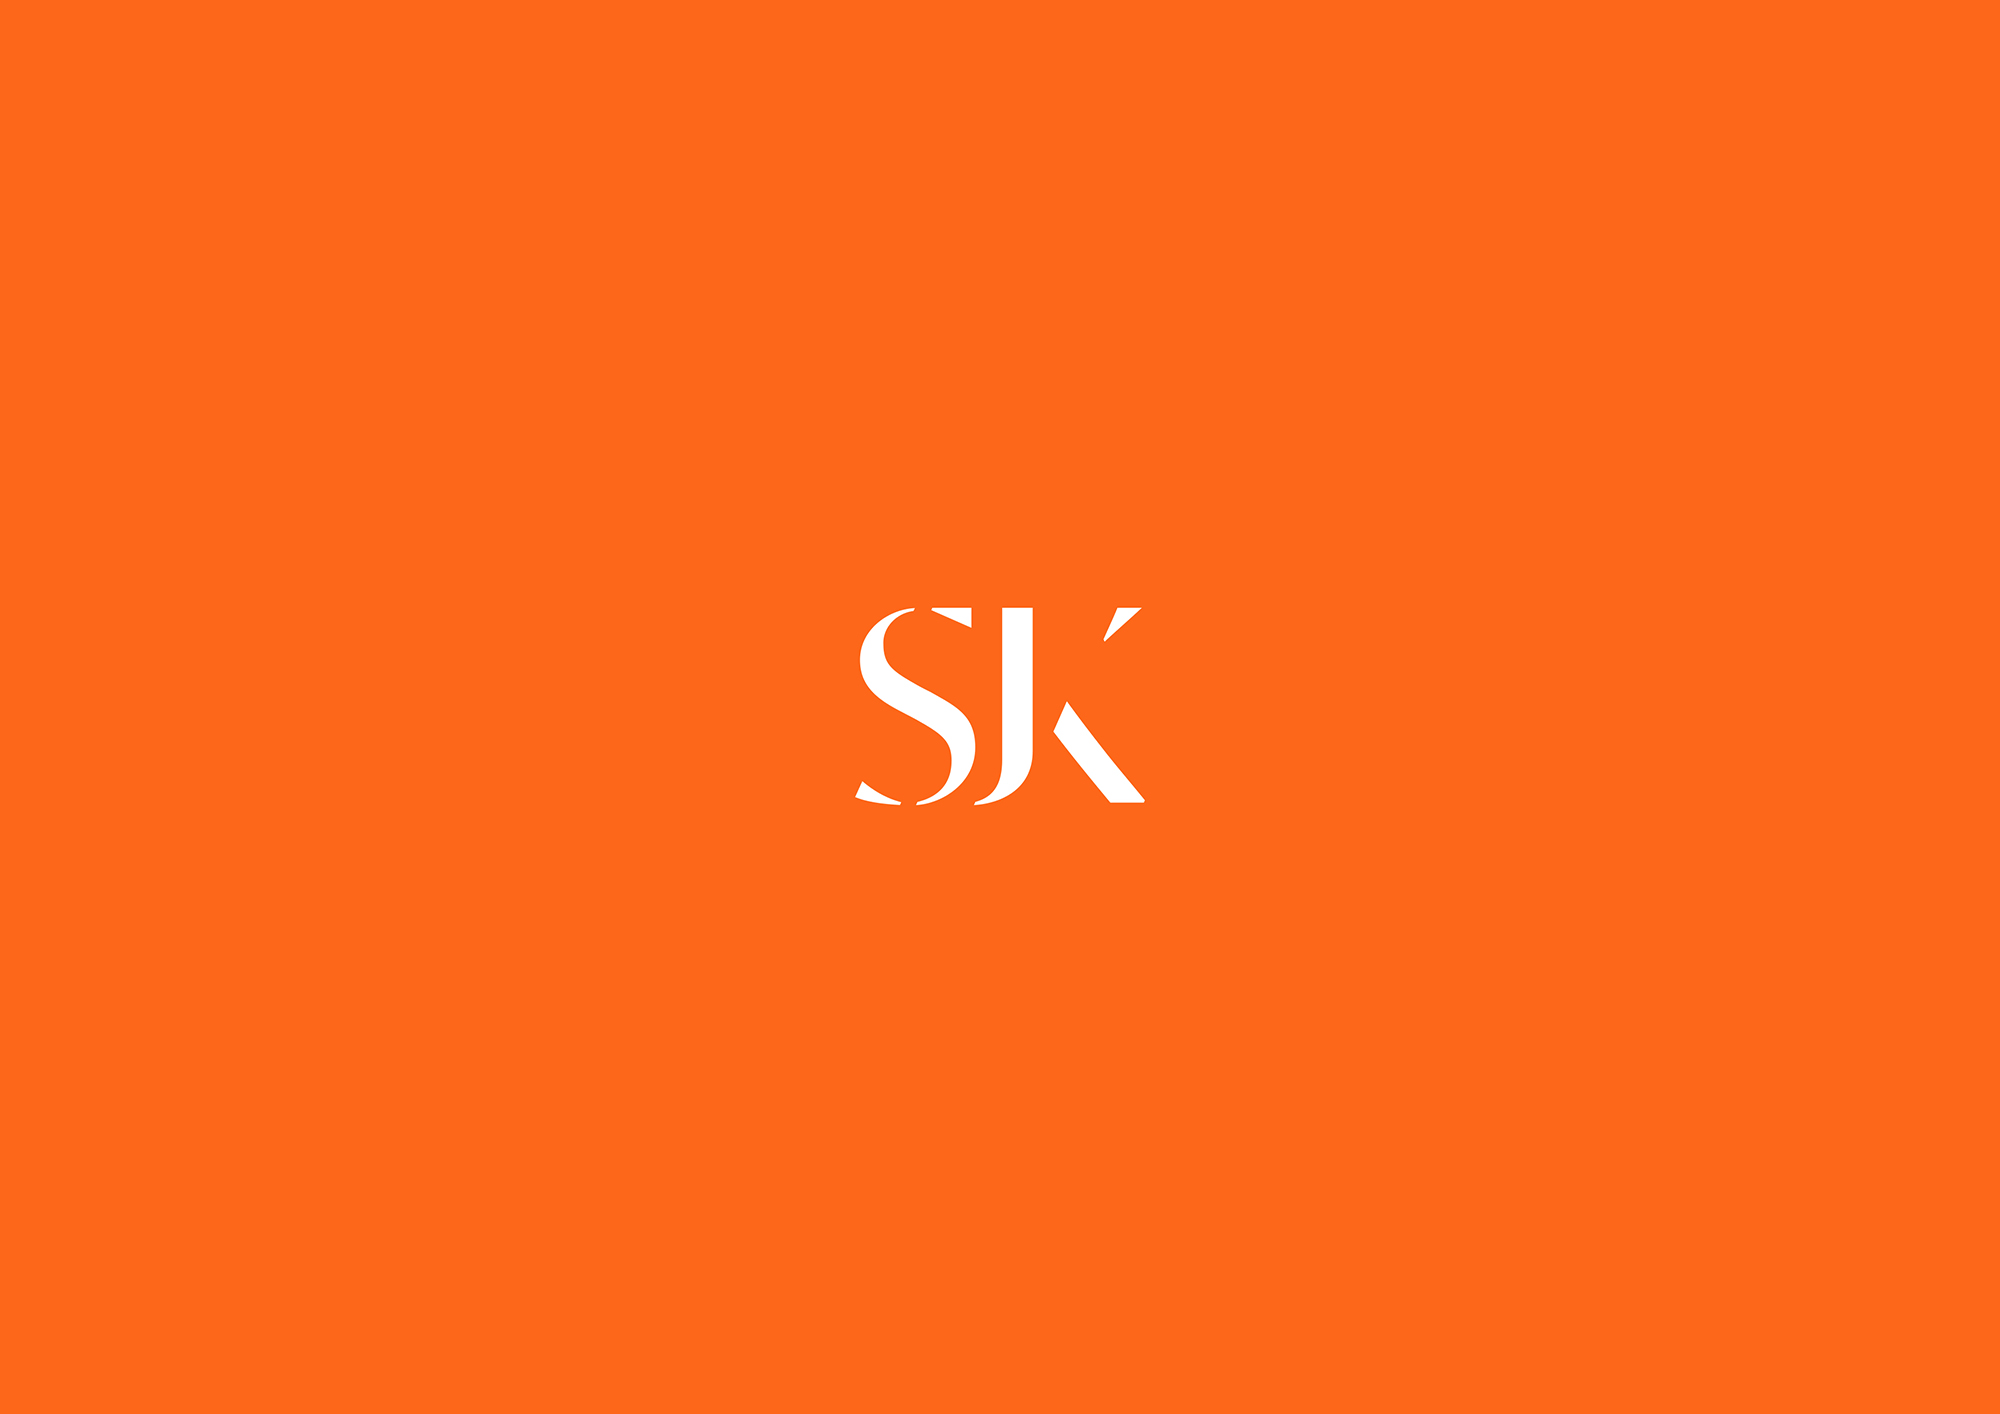 Cover image: SJK